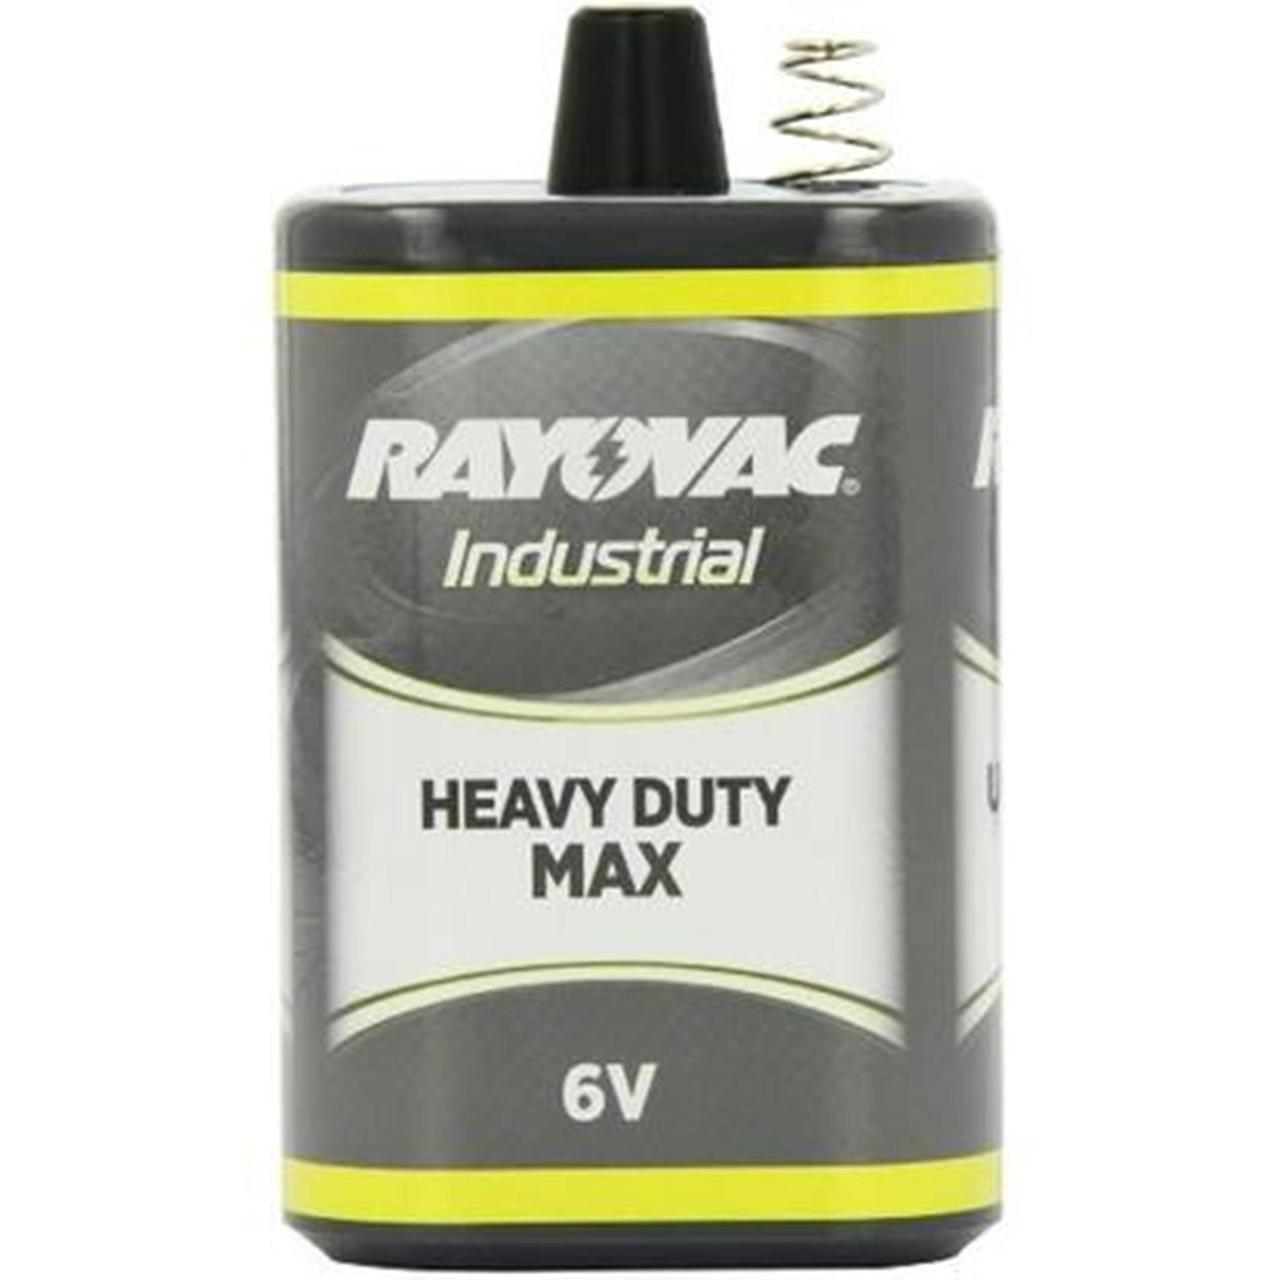 Rayovac 6V-HDM Industrial Heavy Duty Max 6V Spring Top Lantern Battery + FREE SHIPPING